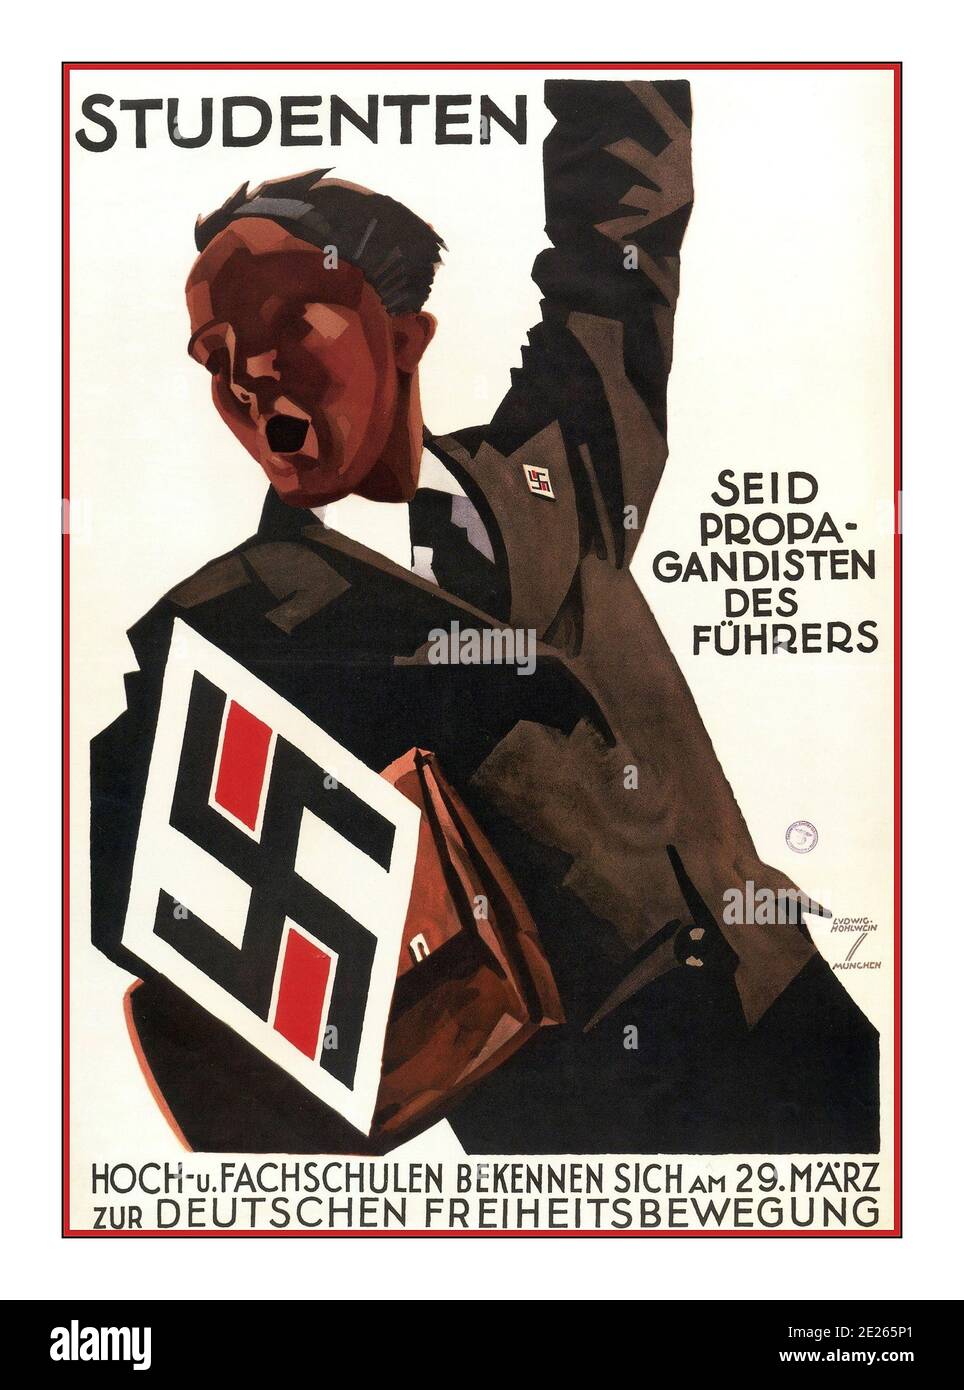 1930 Germany Propaganda Election Poster STUDENTEN  ‘Students are Propagandist Of The Führer’ Nazi Party Swastika Emblem by Ludwig Hohlwein Munich Germany. SEID PROPAGANDISTEN DES FÜHRERS Stock Photo